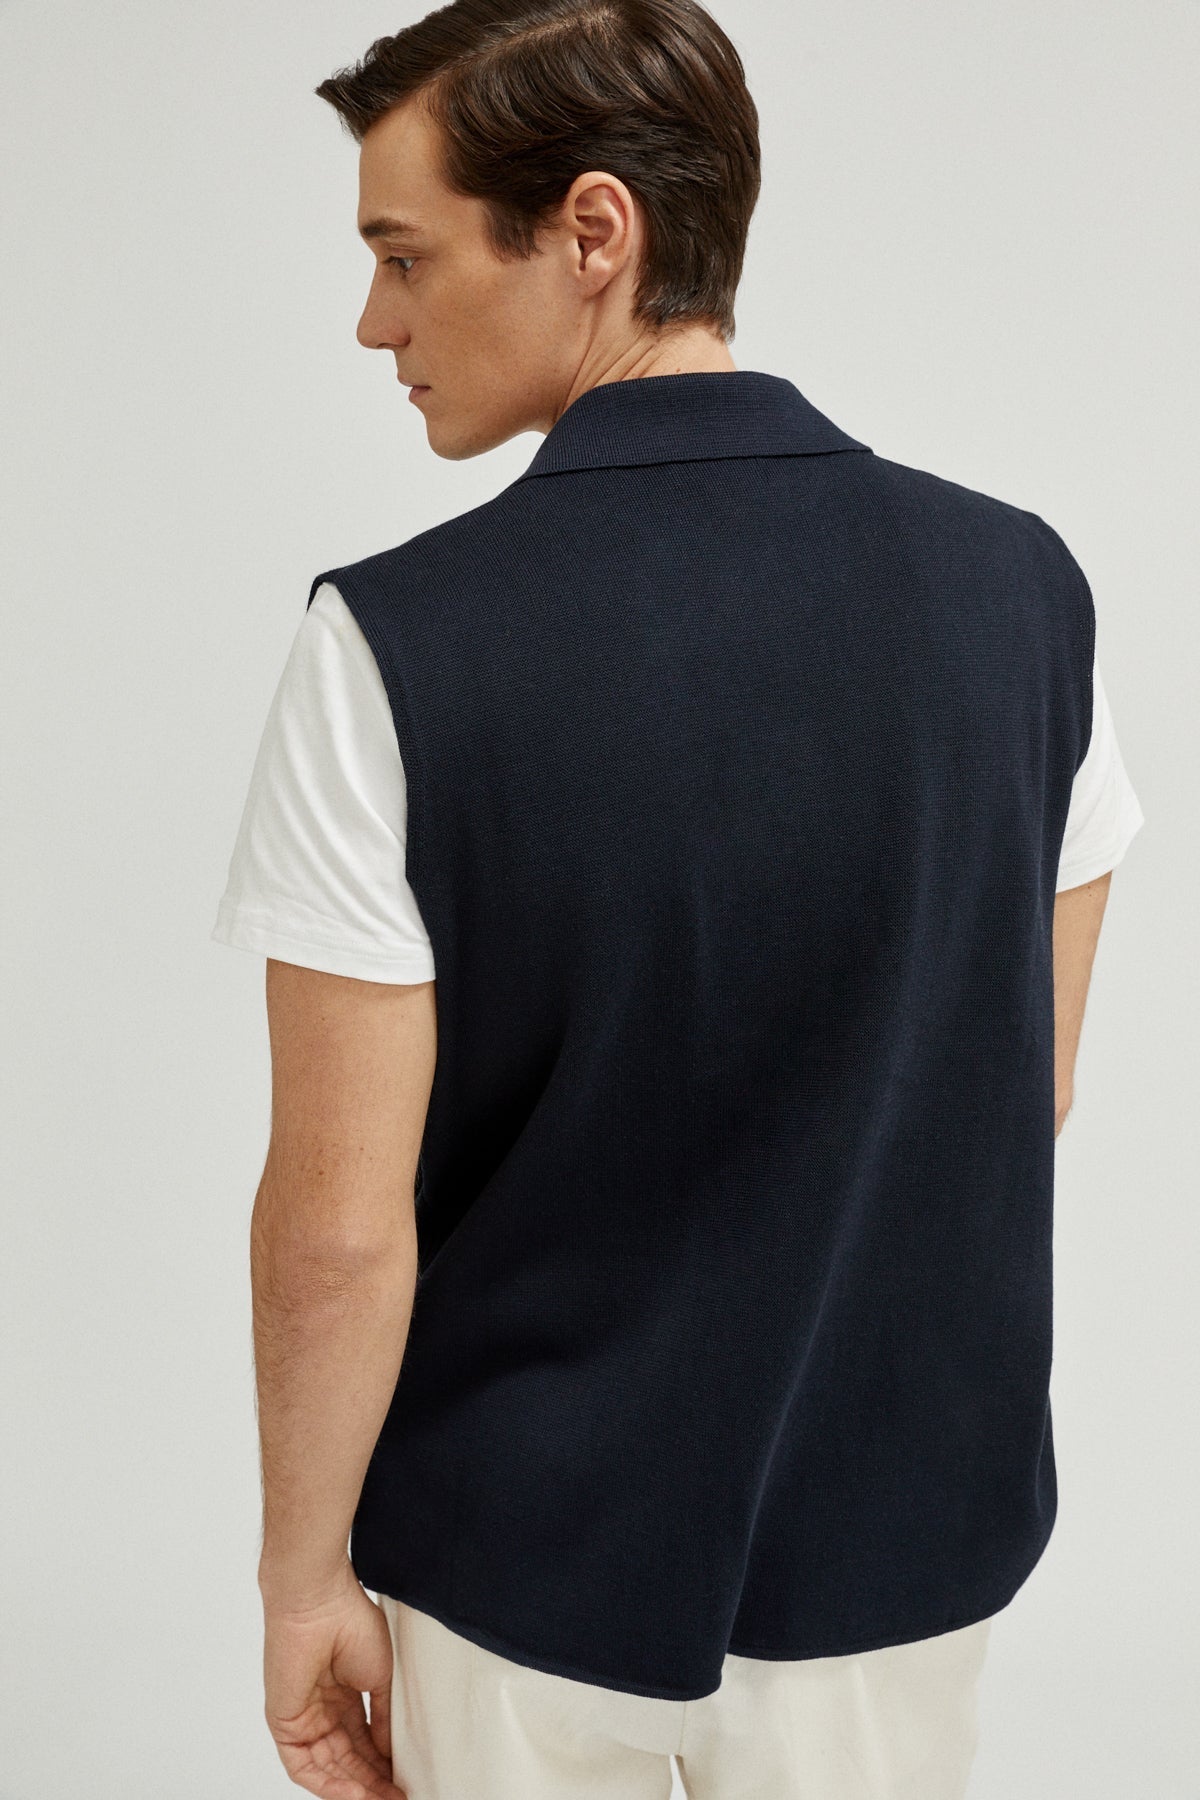 Blue Navy | The Organic Cotton Vest